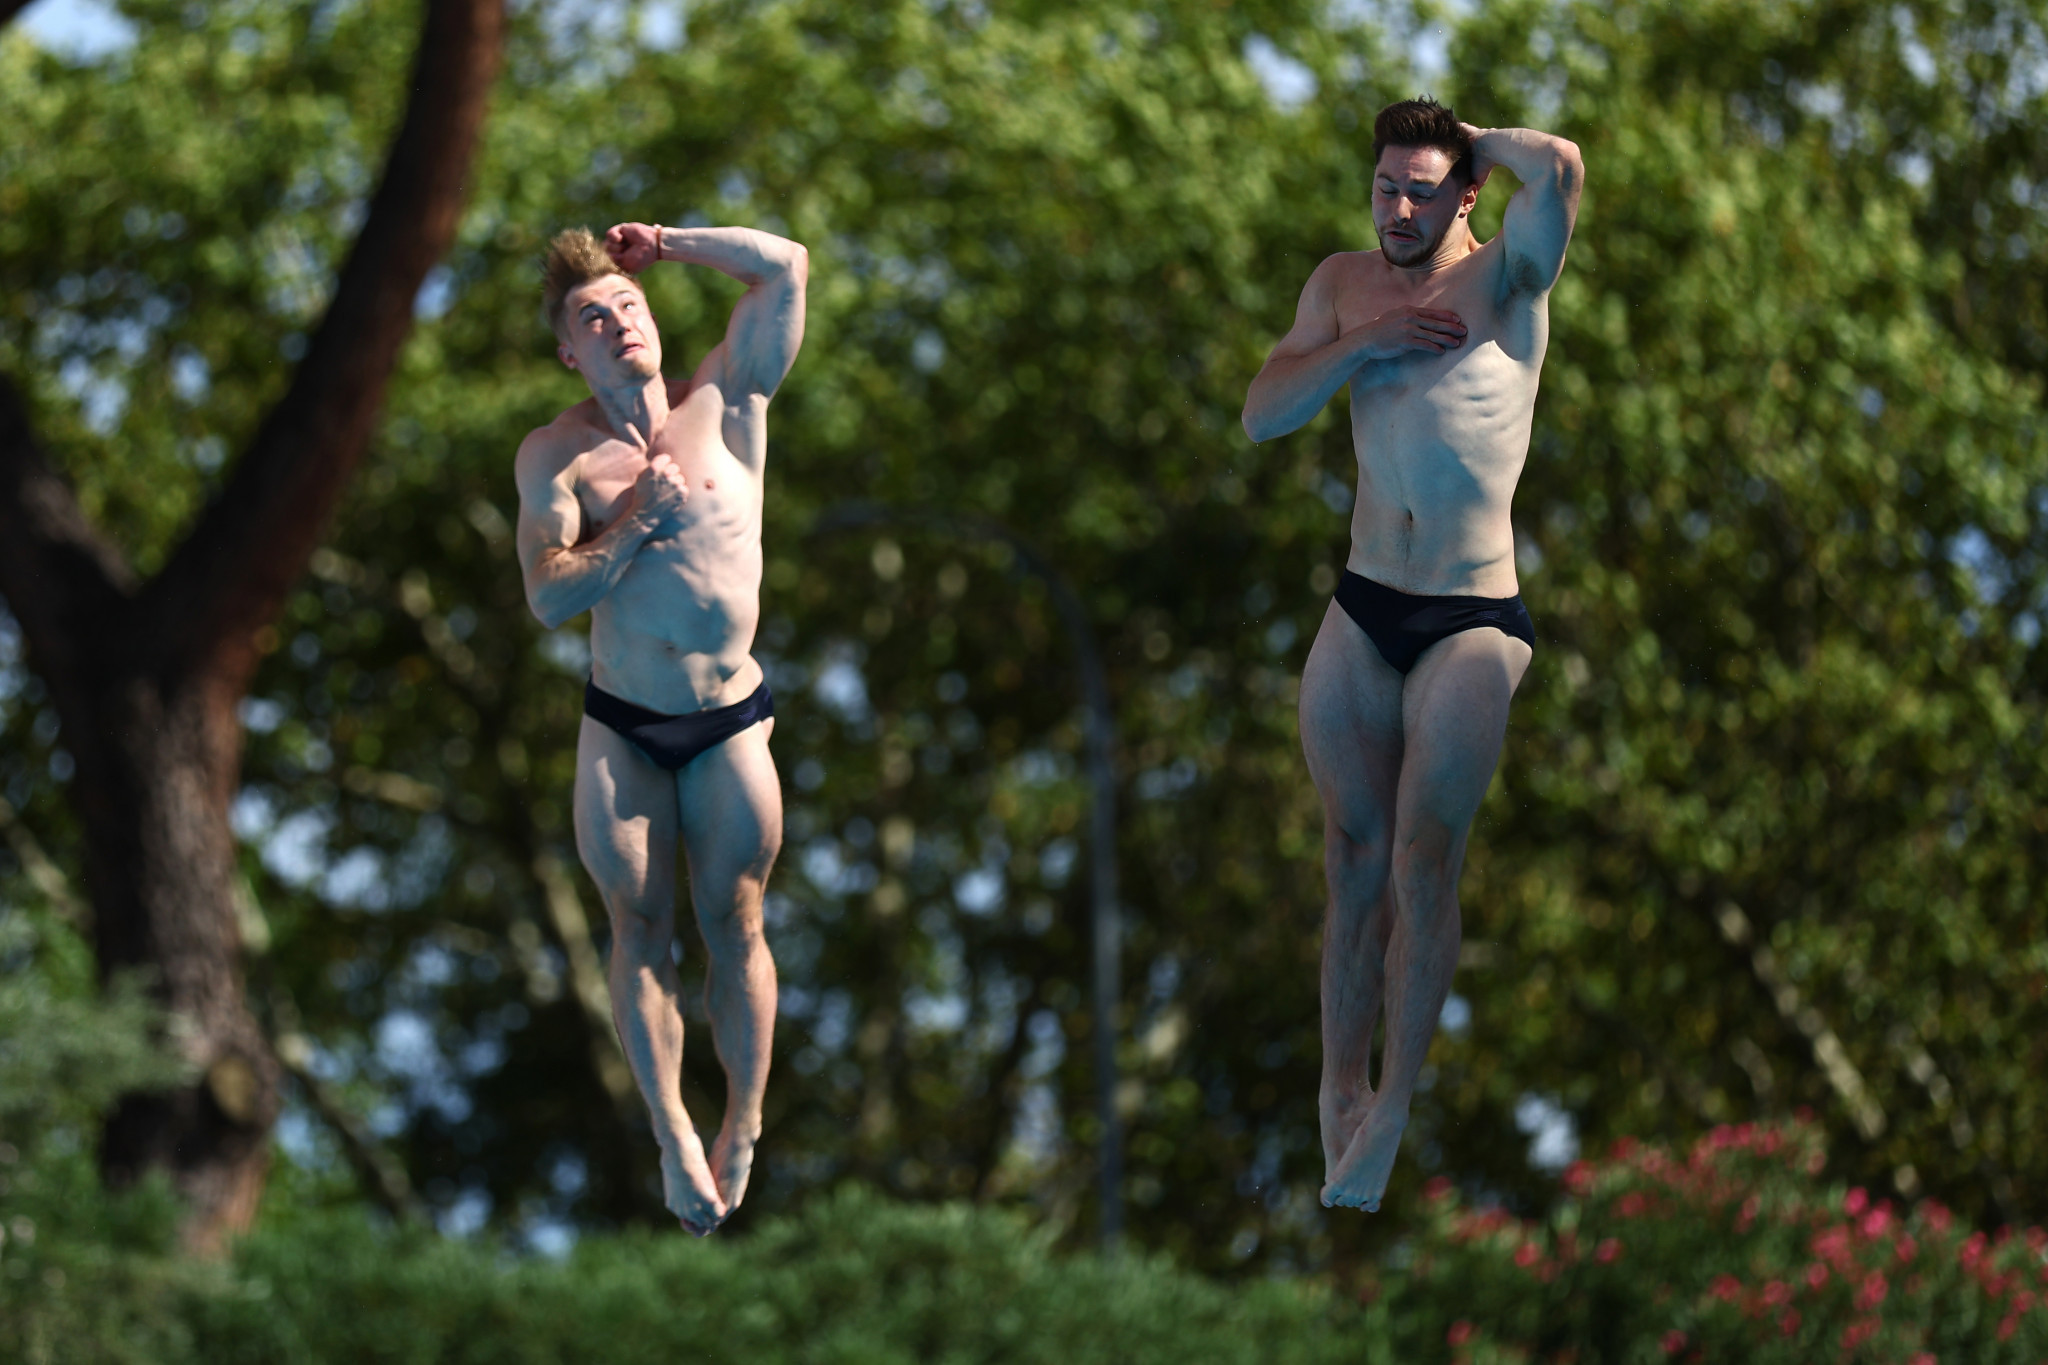 Britain and Ukraine claim last diving titles on final day of European Aquatics Championships